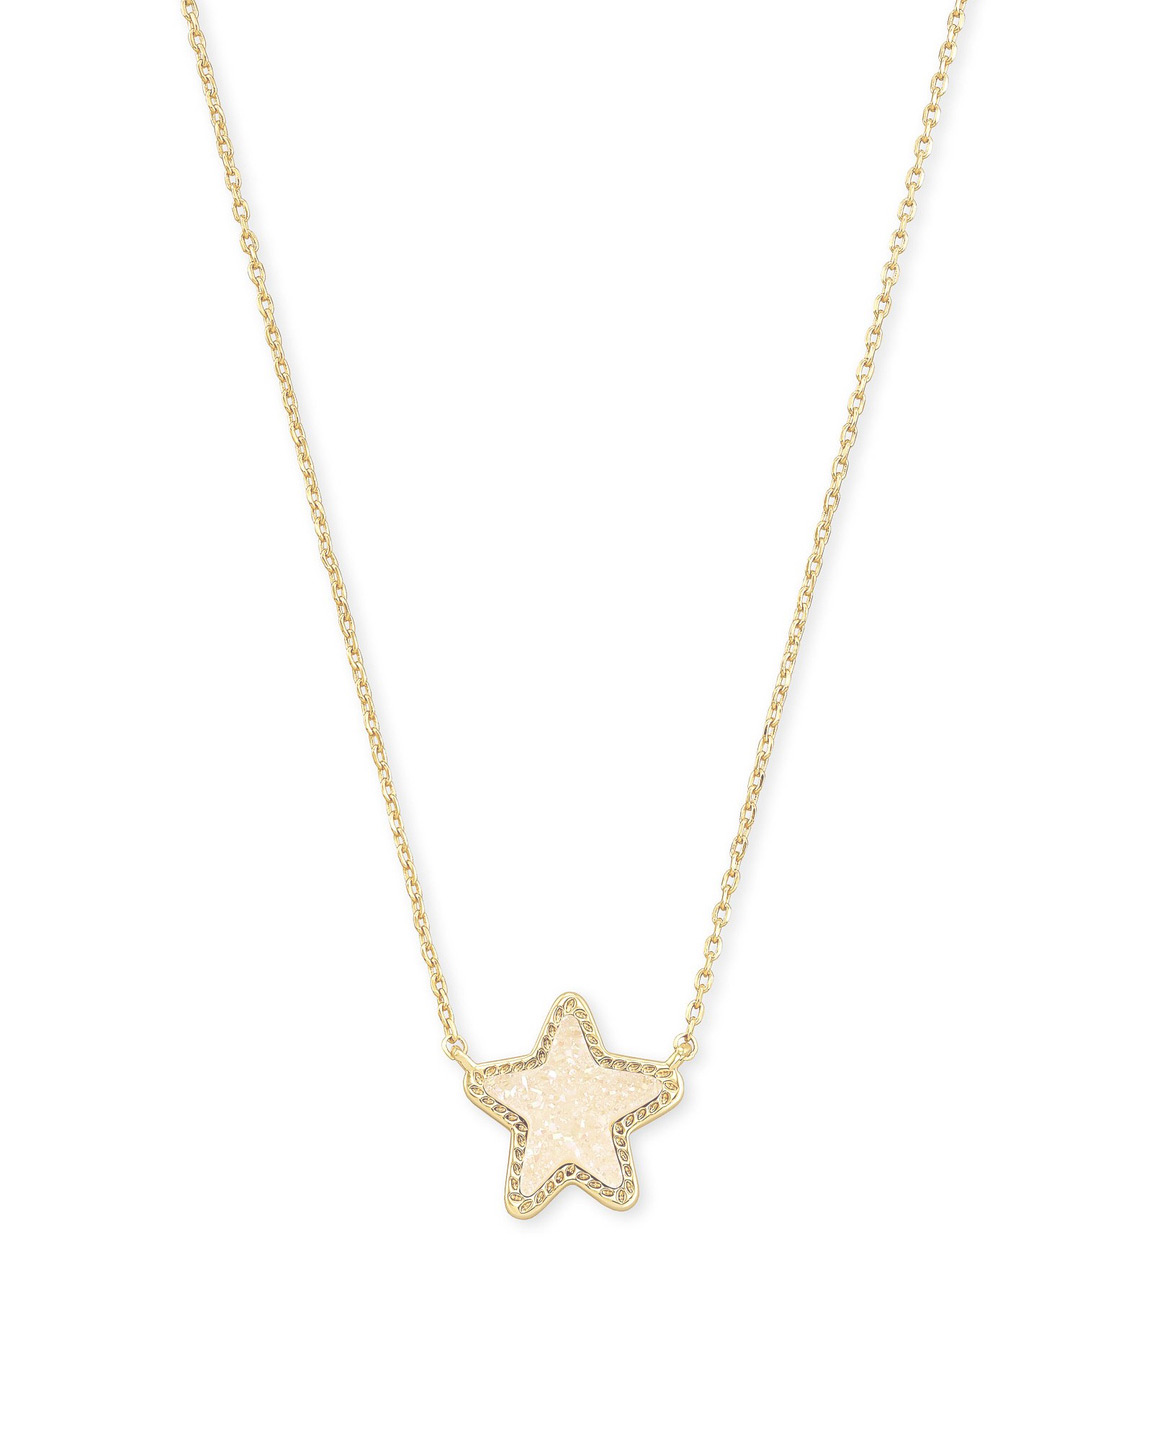 Kendra Scott - Jae Star Short Pendant Necklace Gold Tone - Iridescent Drusy